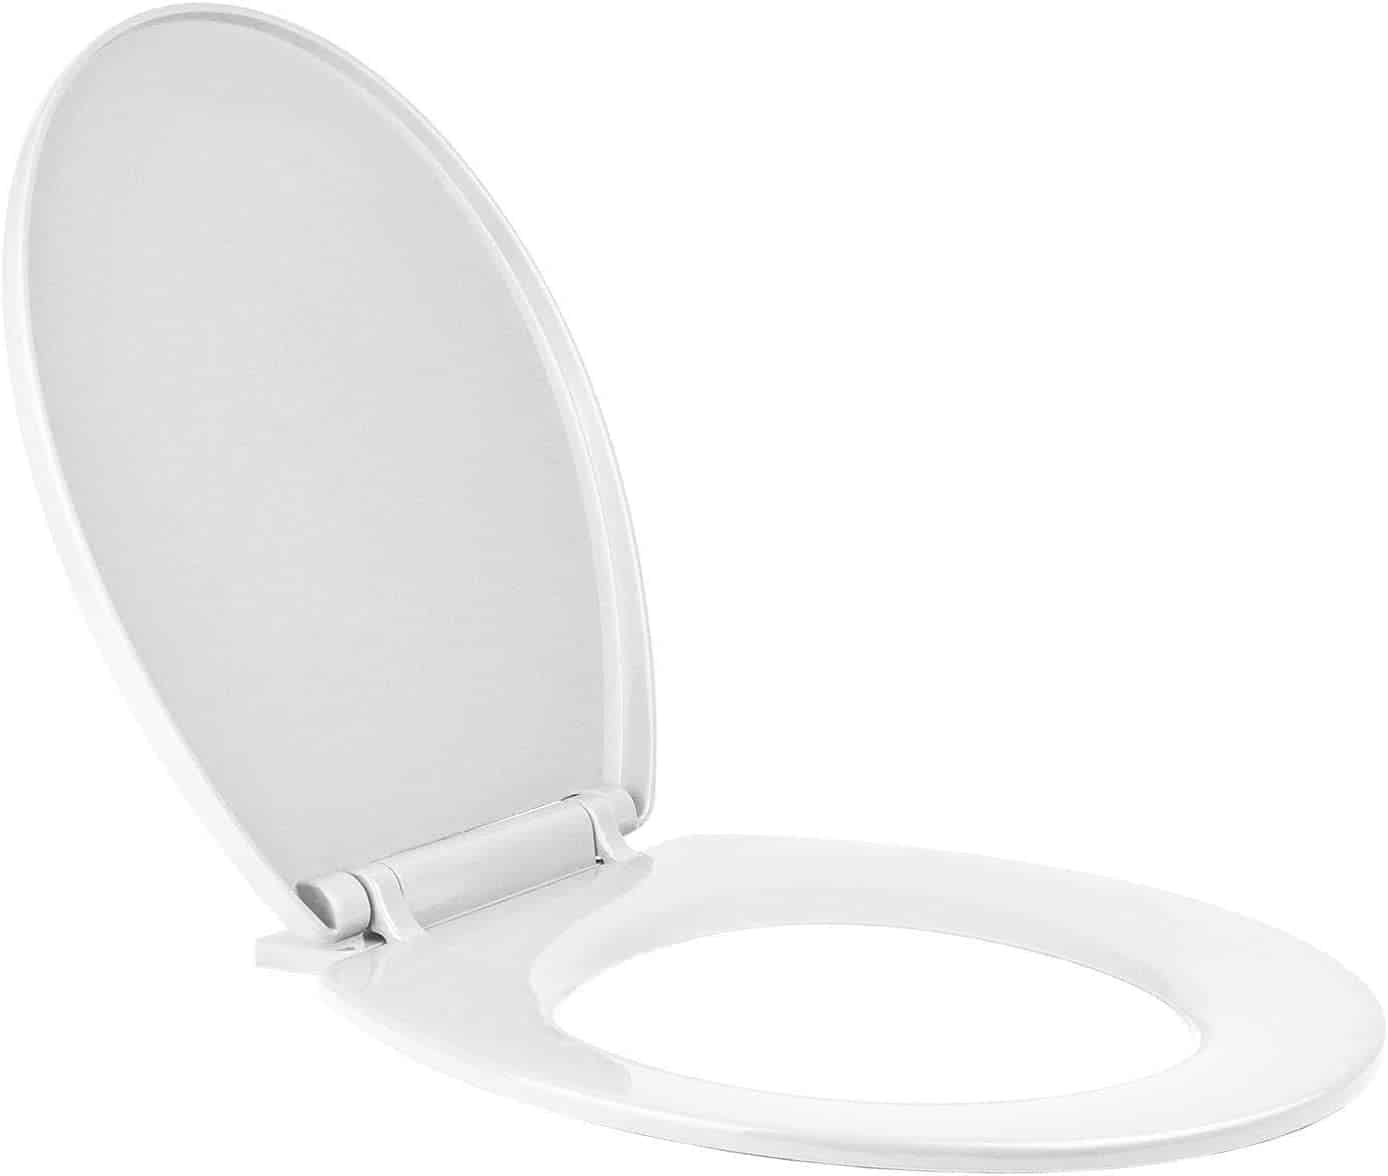 Oval-shaped toilet seats